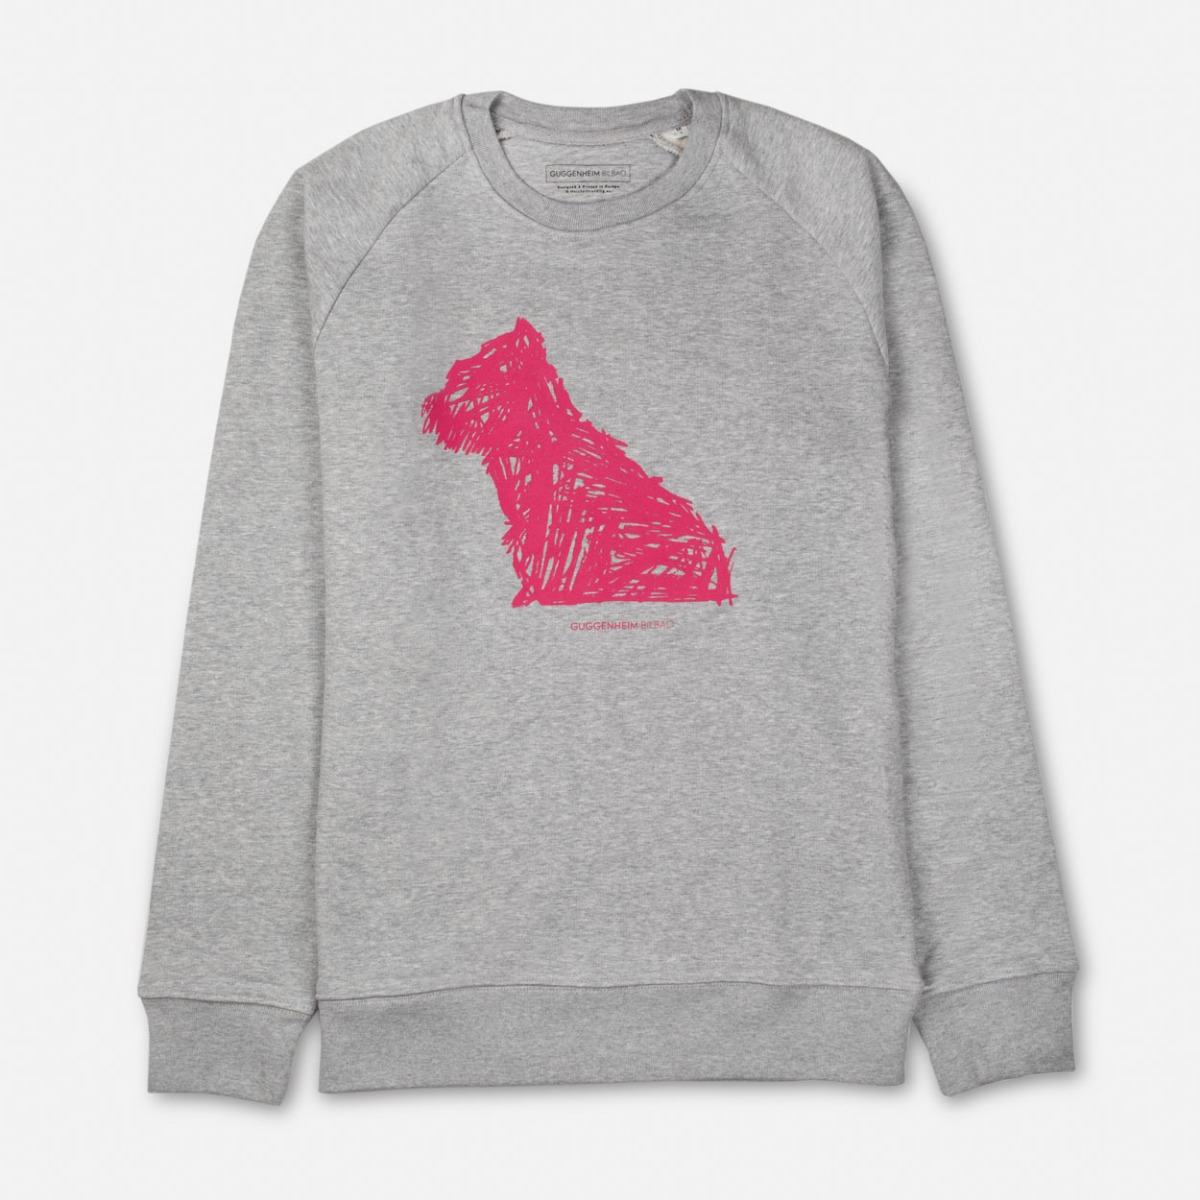 Grey Puppy Sweatshirt